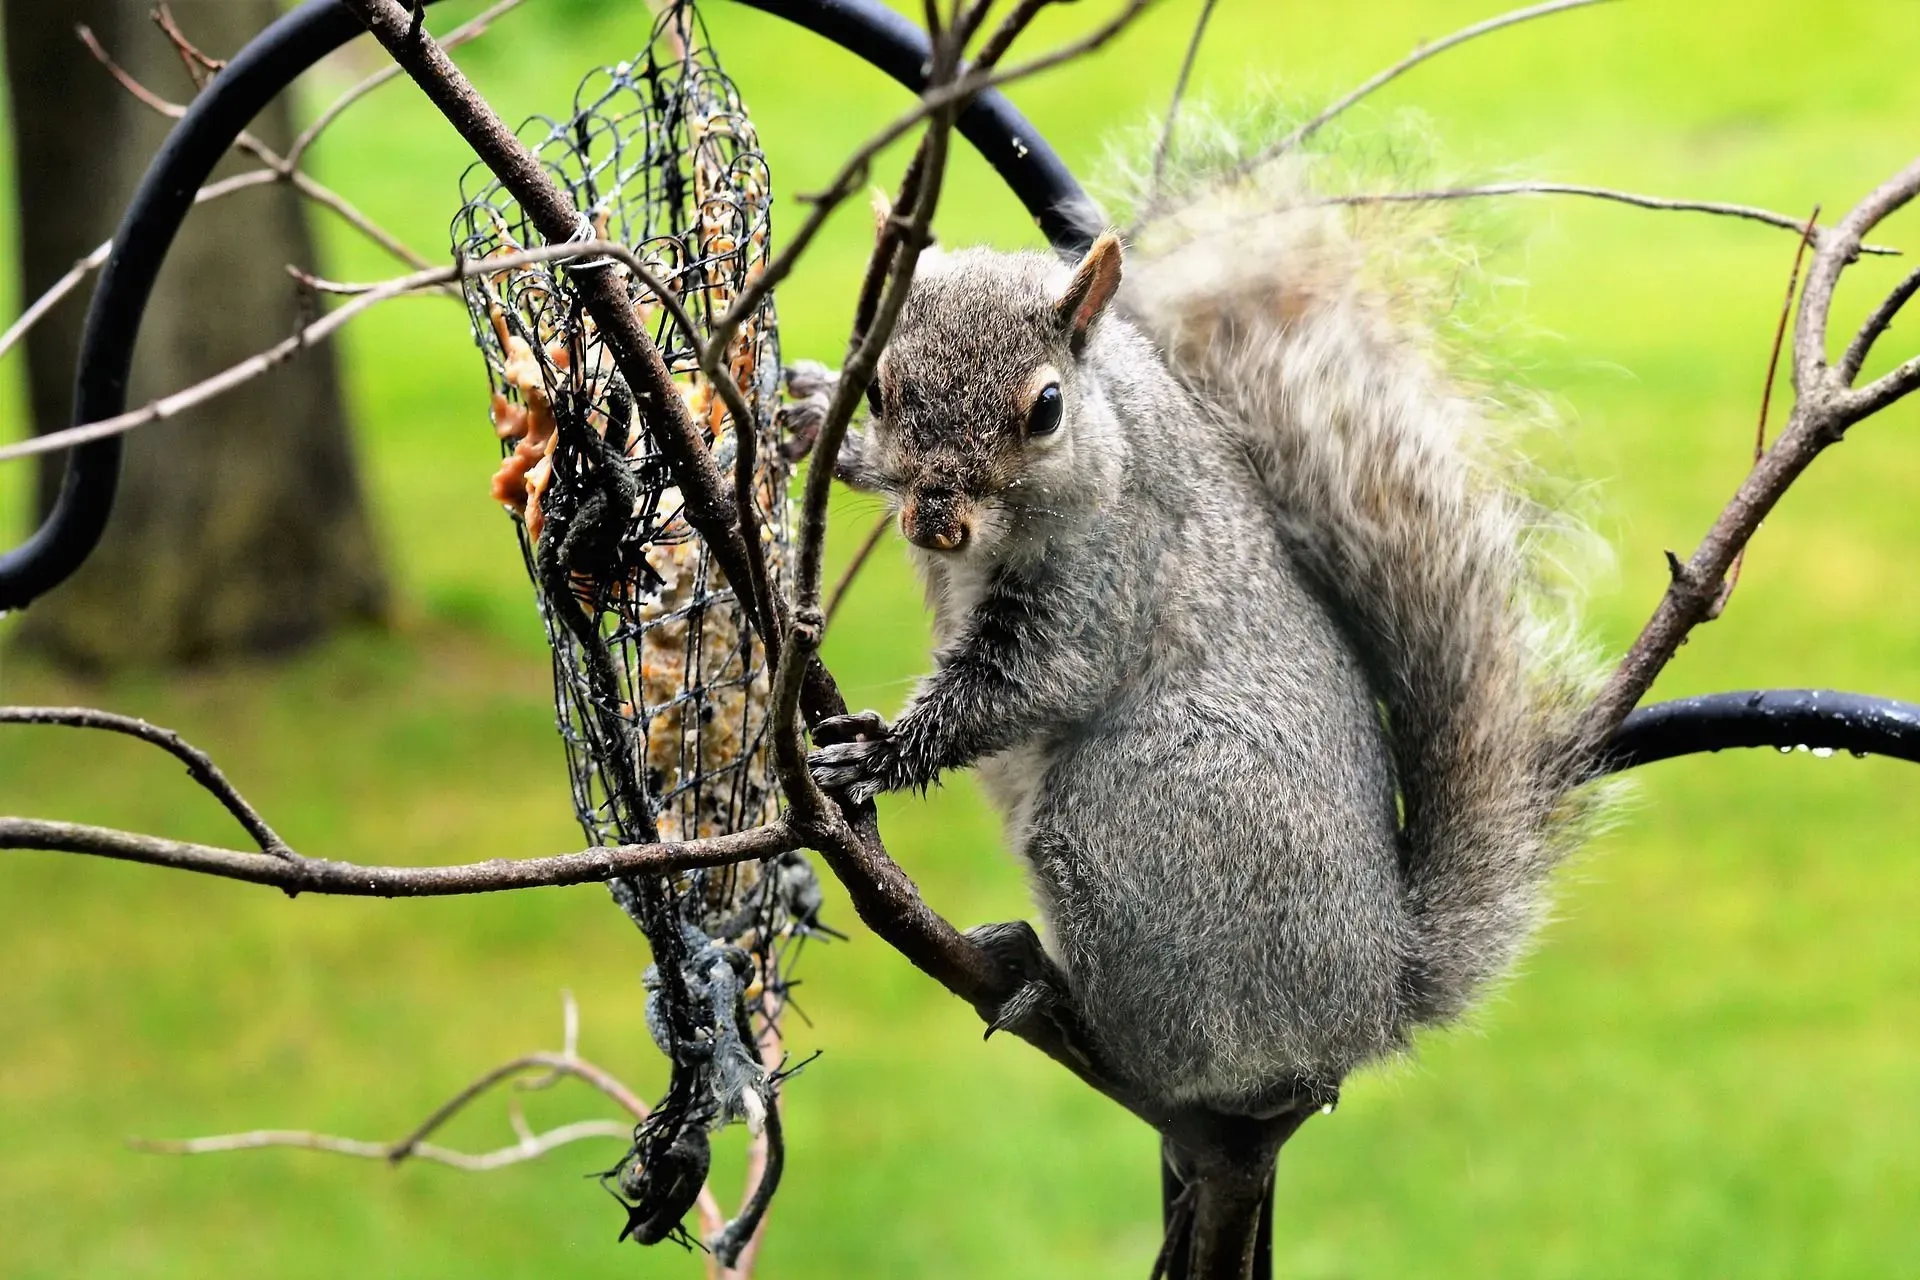 Do squirrels eat birds? Yes, squirrels are omnivores that eat birds.